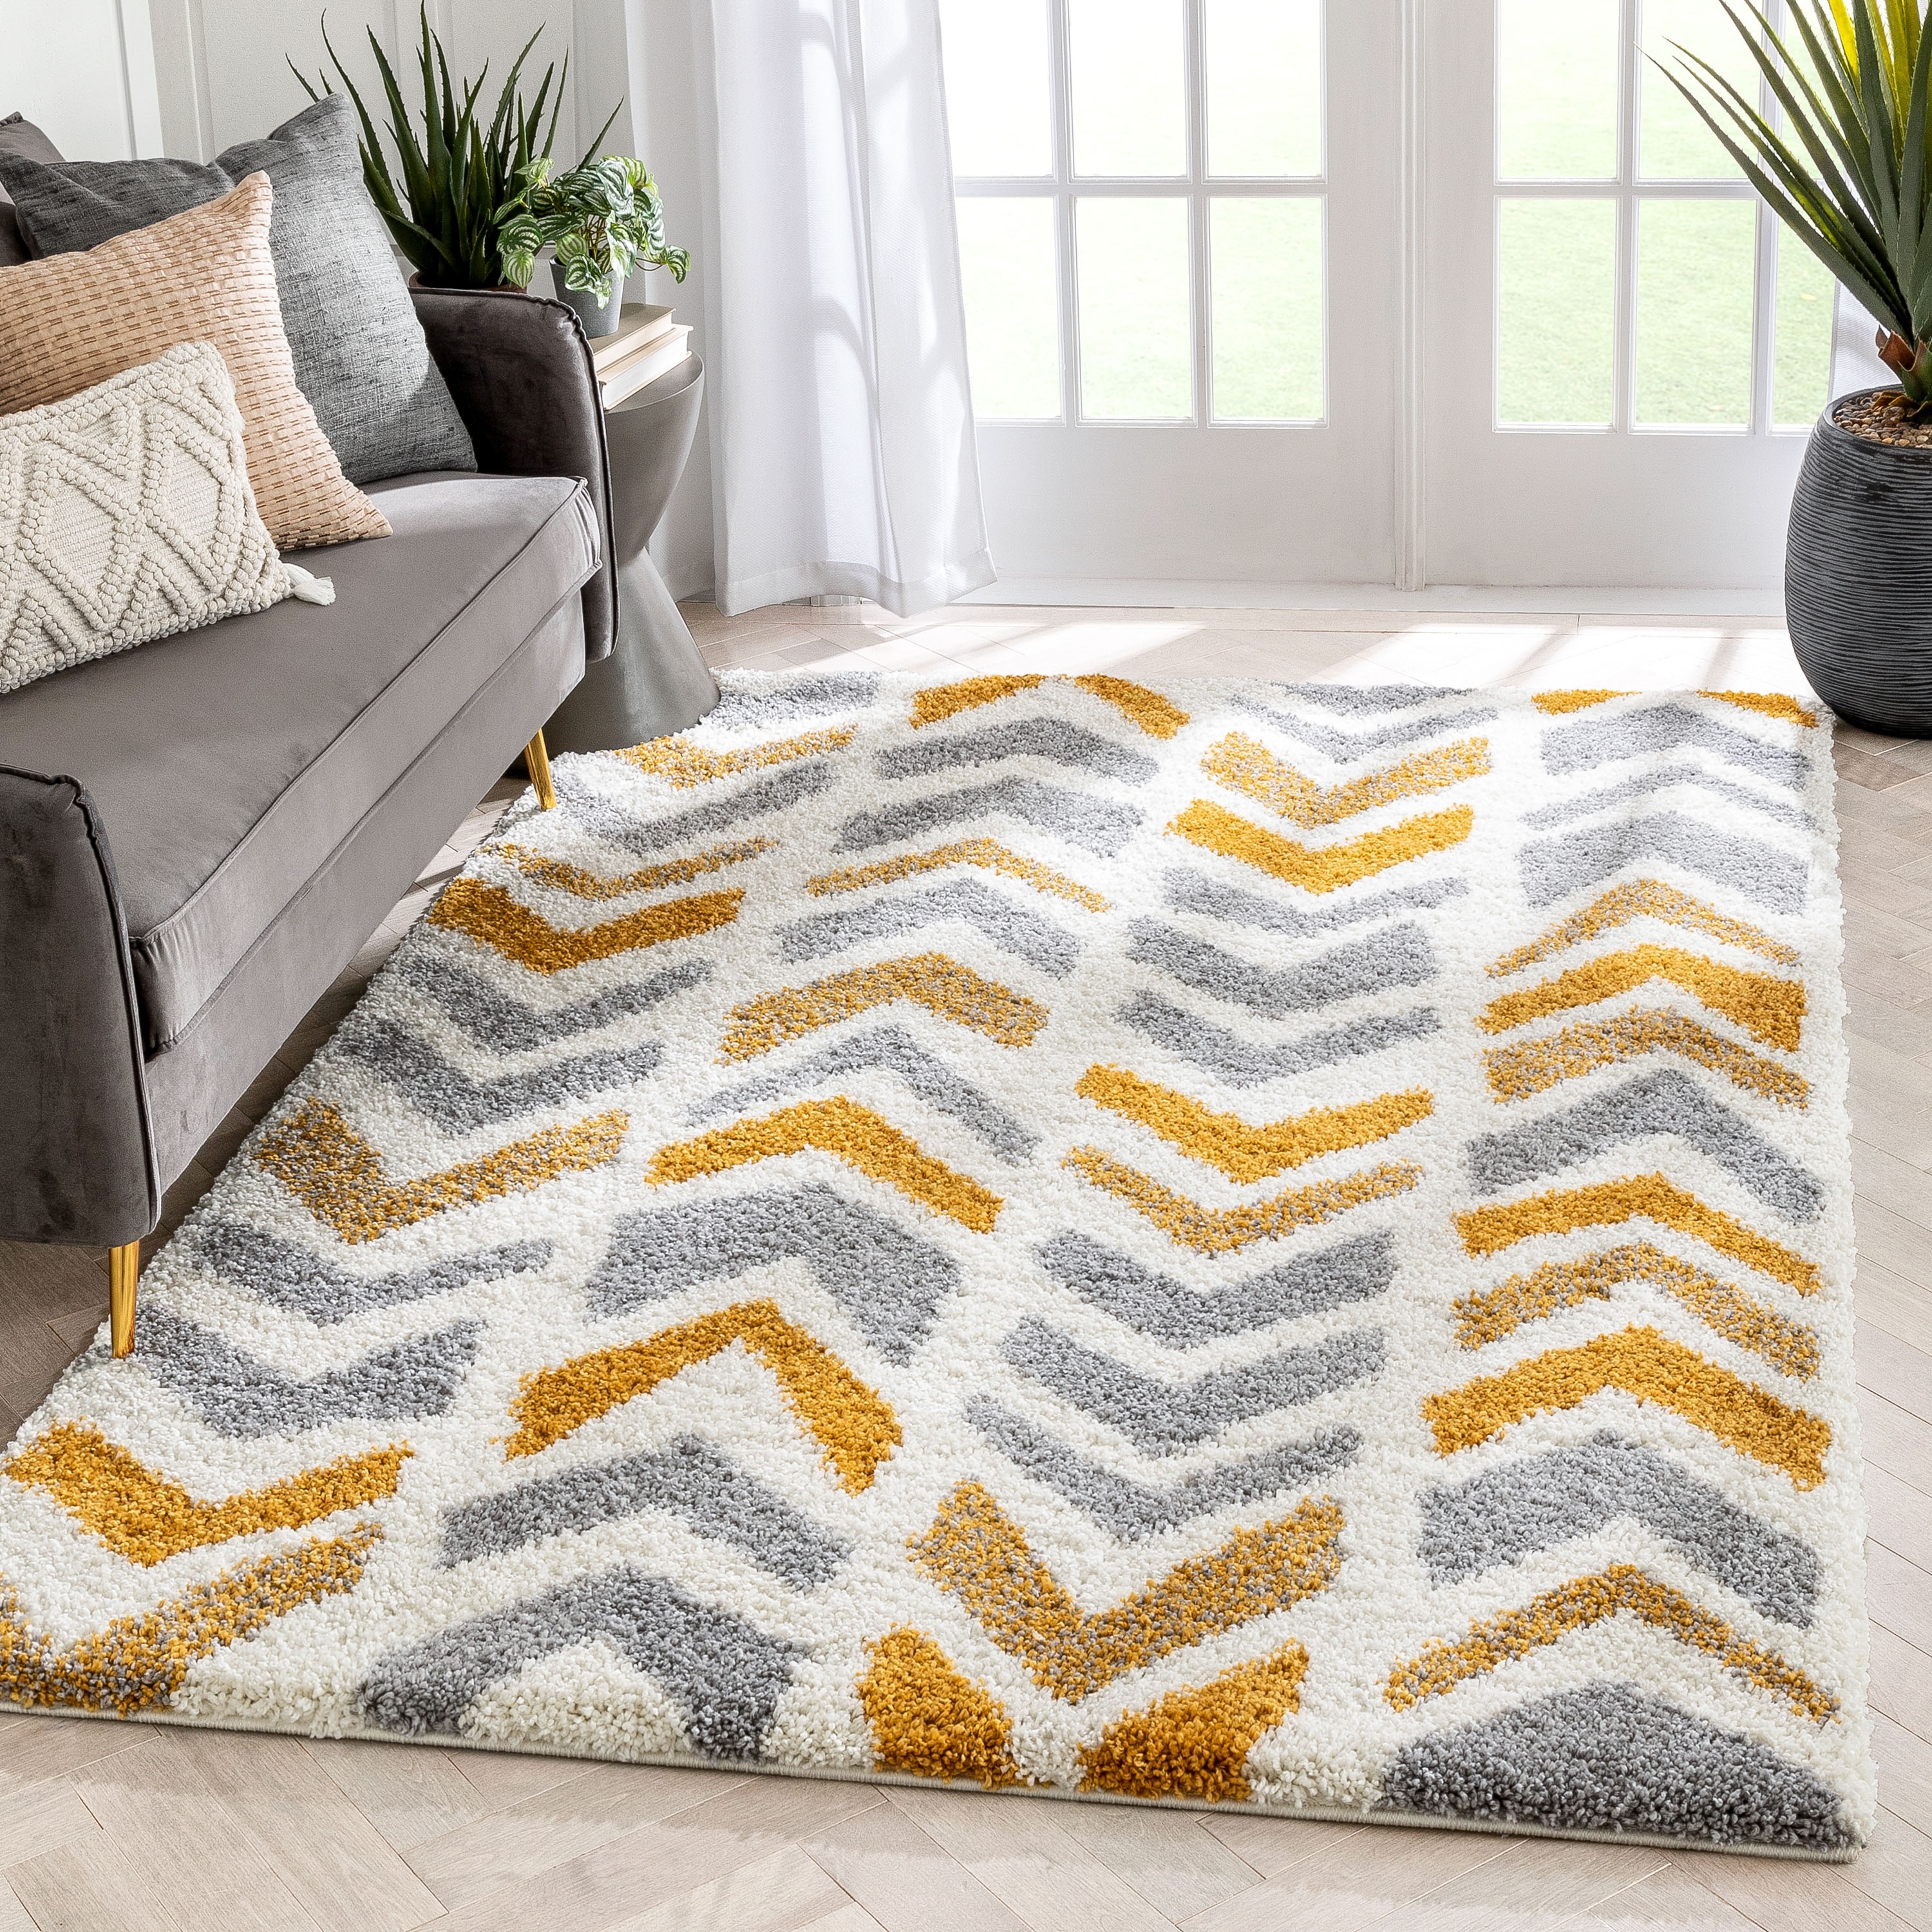 Zig Zag Rug Mustard Yellow Grey Pattern Living Room Carpet Mats Small Large XL 